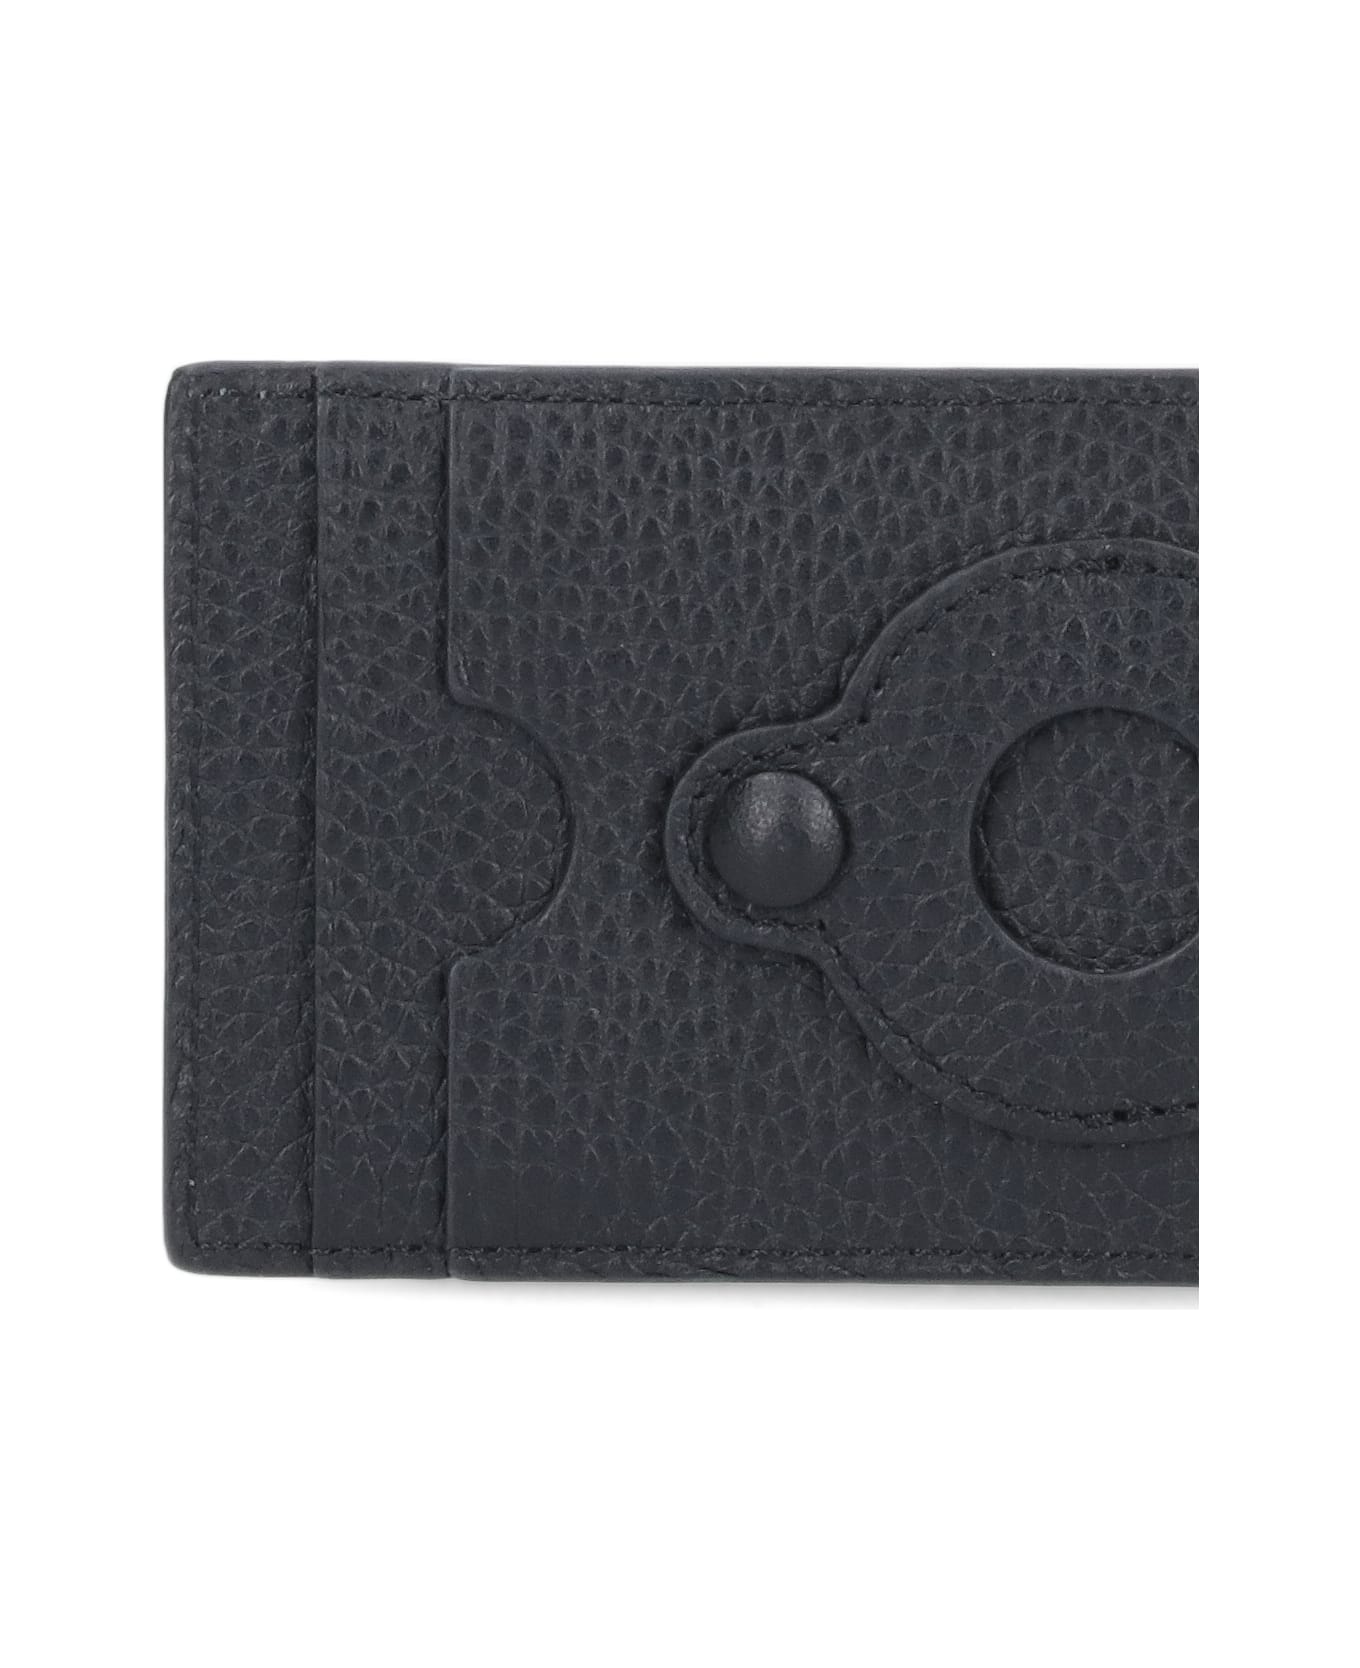 Off-White Leather Card Holder - Black  